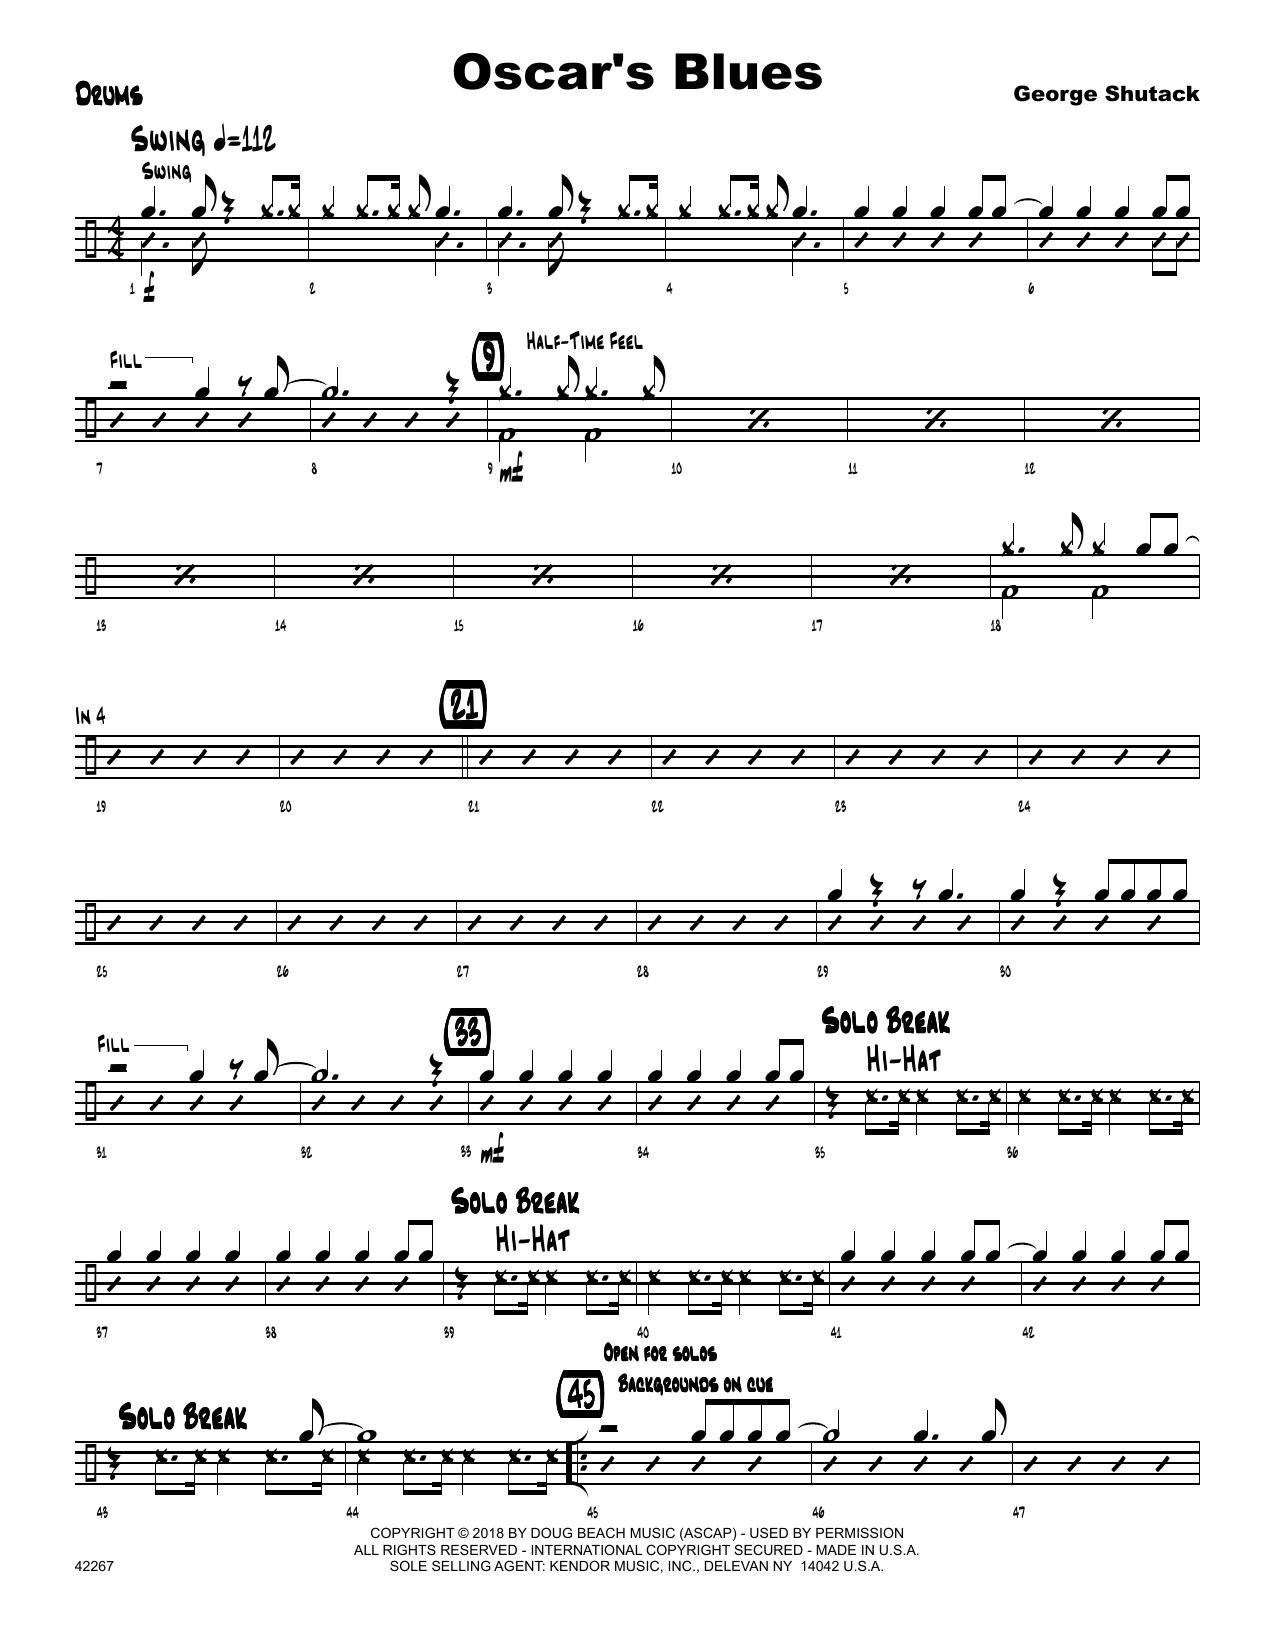 Download George Shutack Oscar's Blues - Drum Set Sheet Music